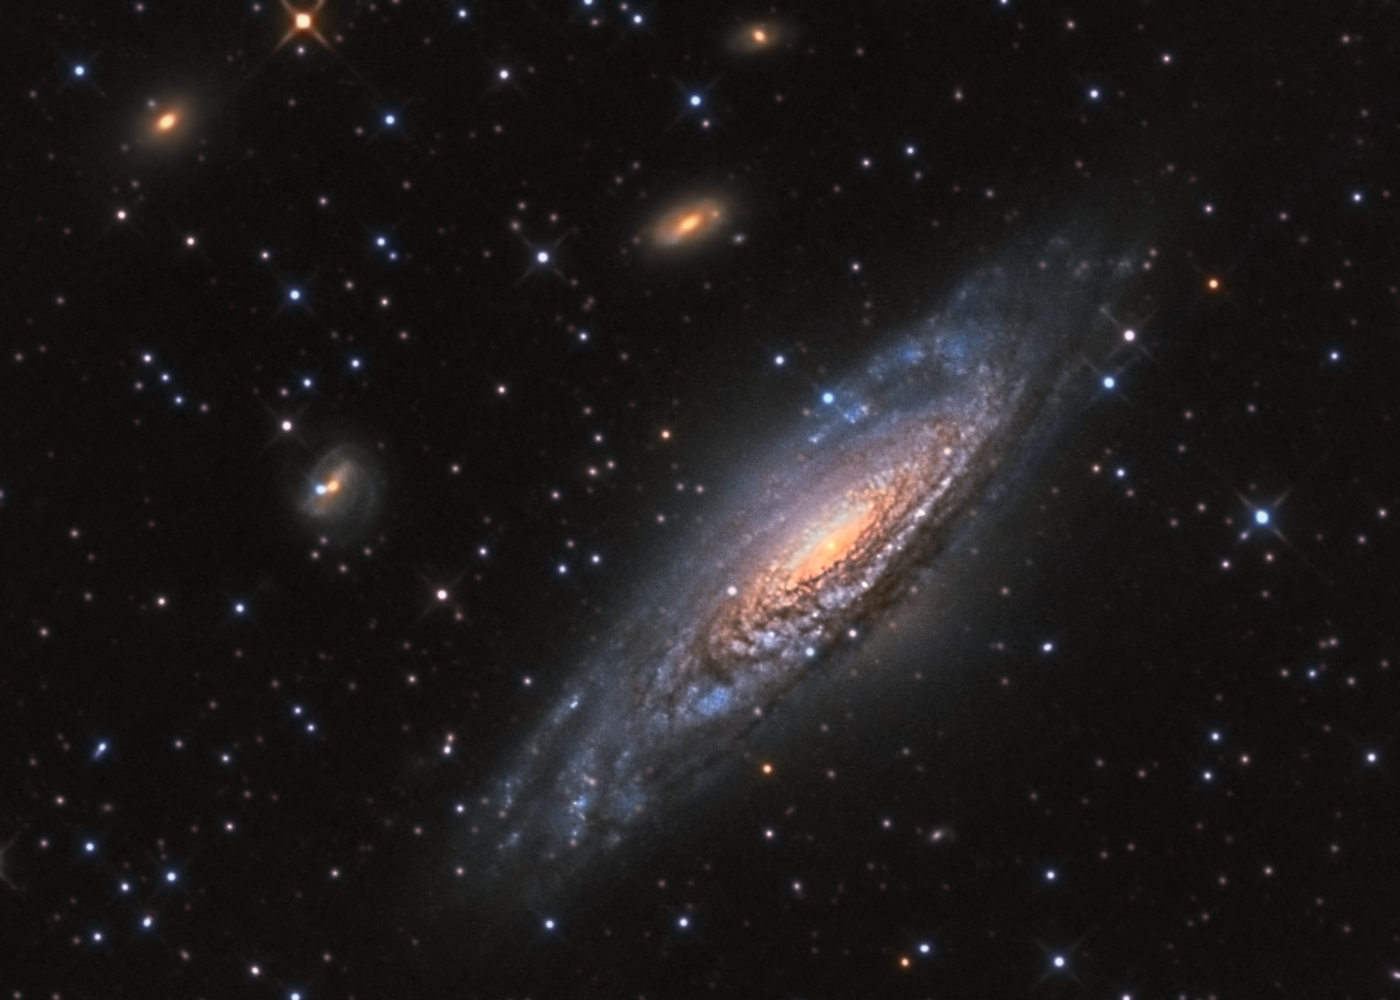 NGC7331.jpg